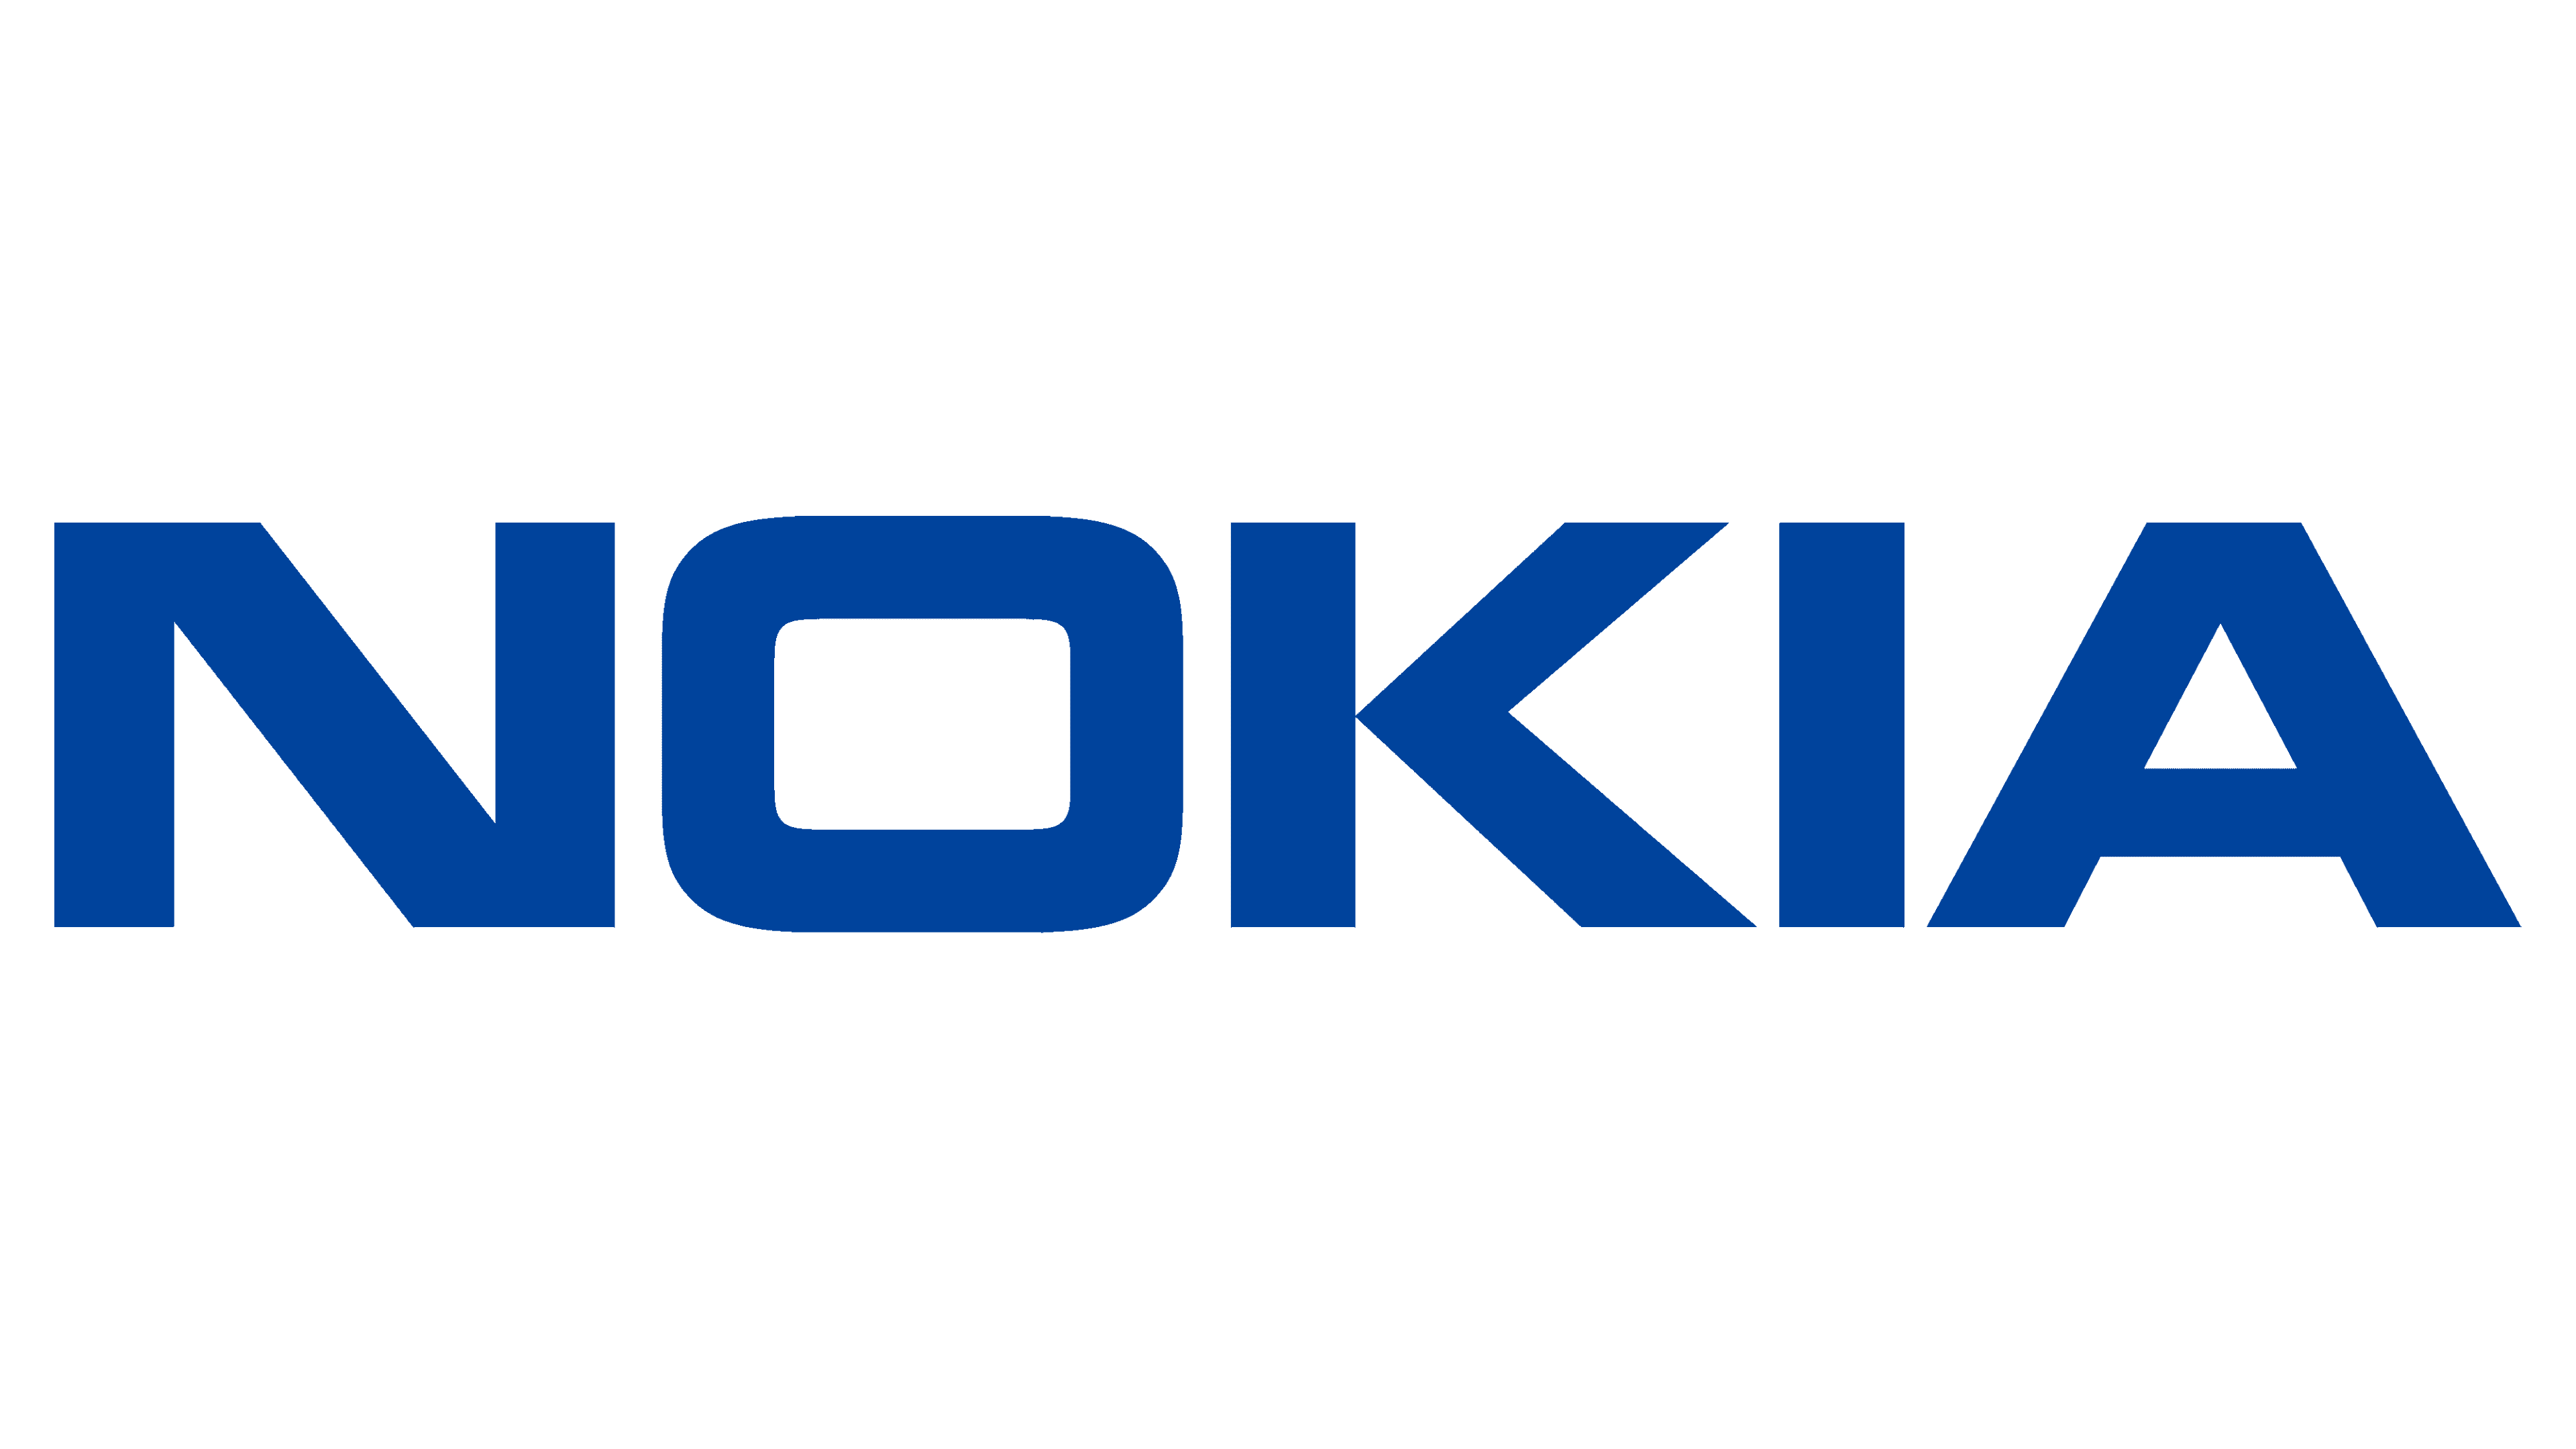 Nokia Brand Value & Company Profile | Brandirectory